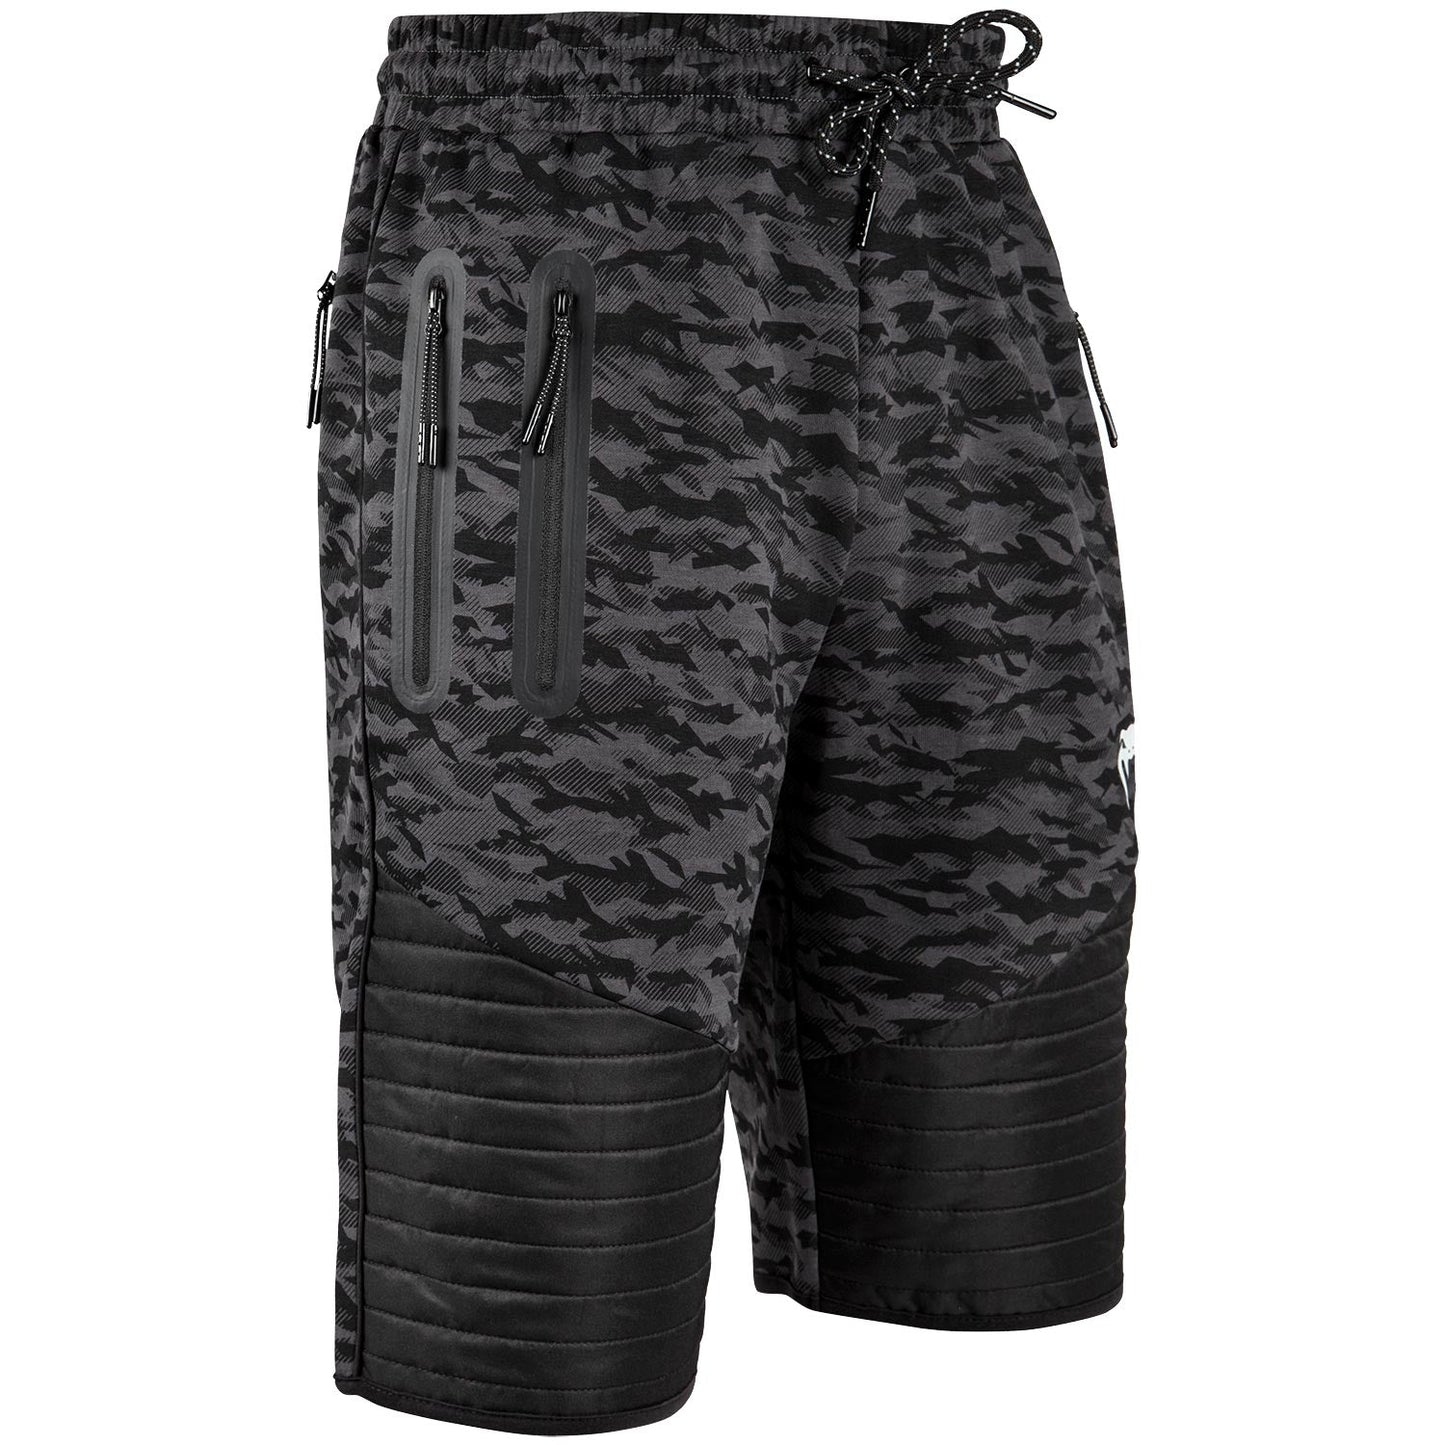 Venum Laser Cotton Shorts - Dark camo